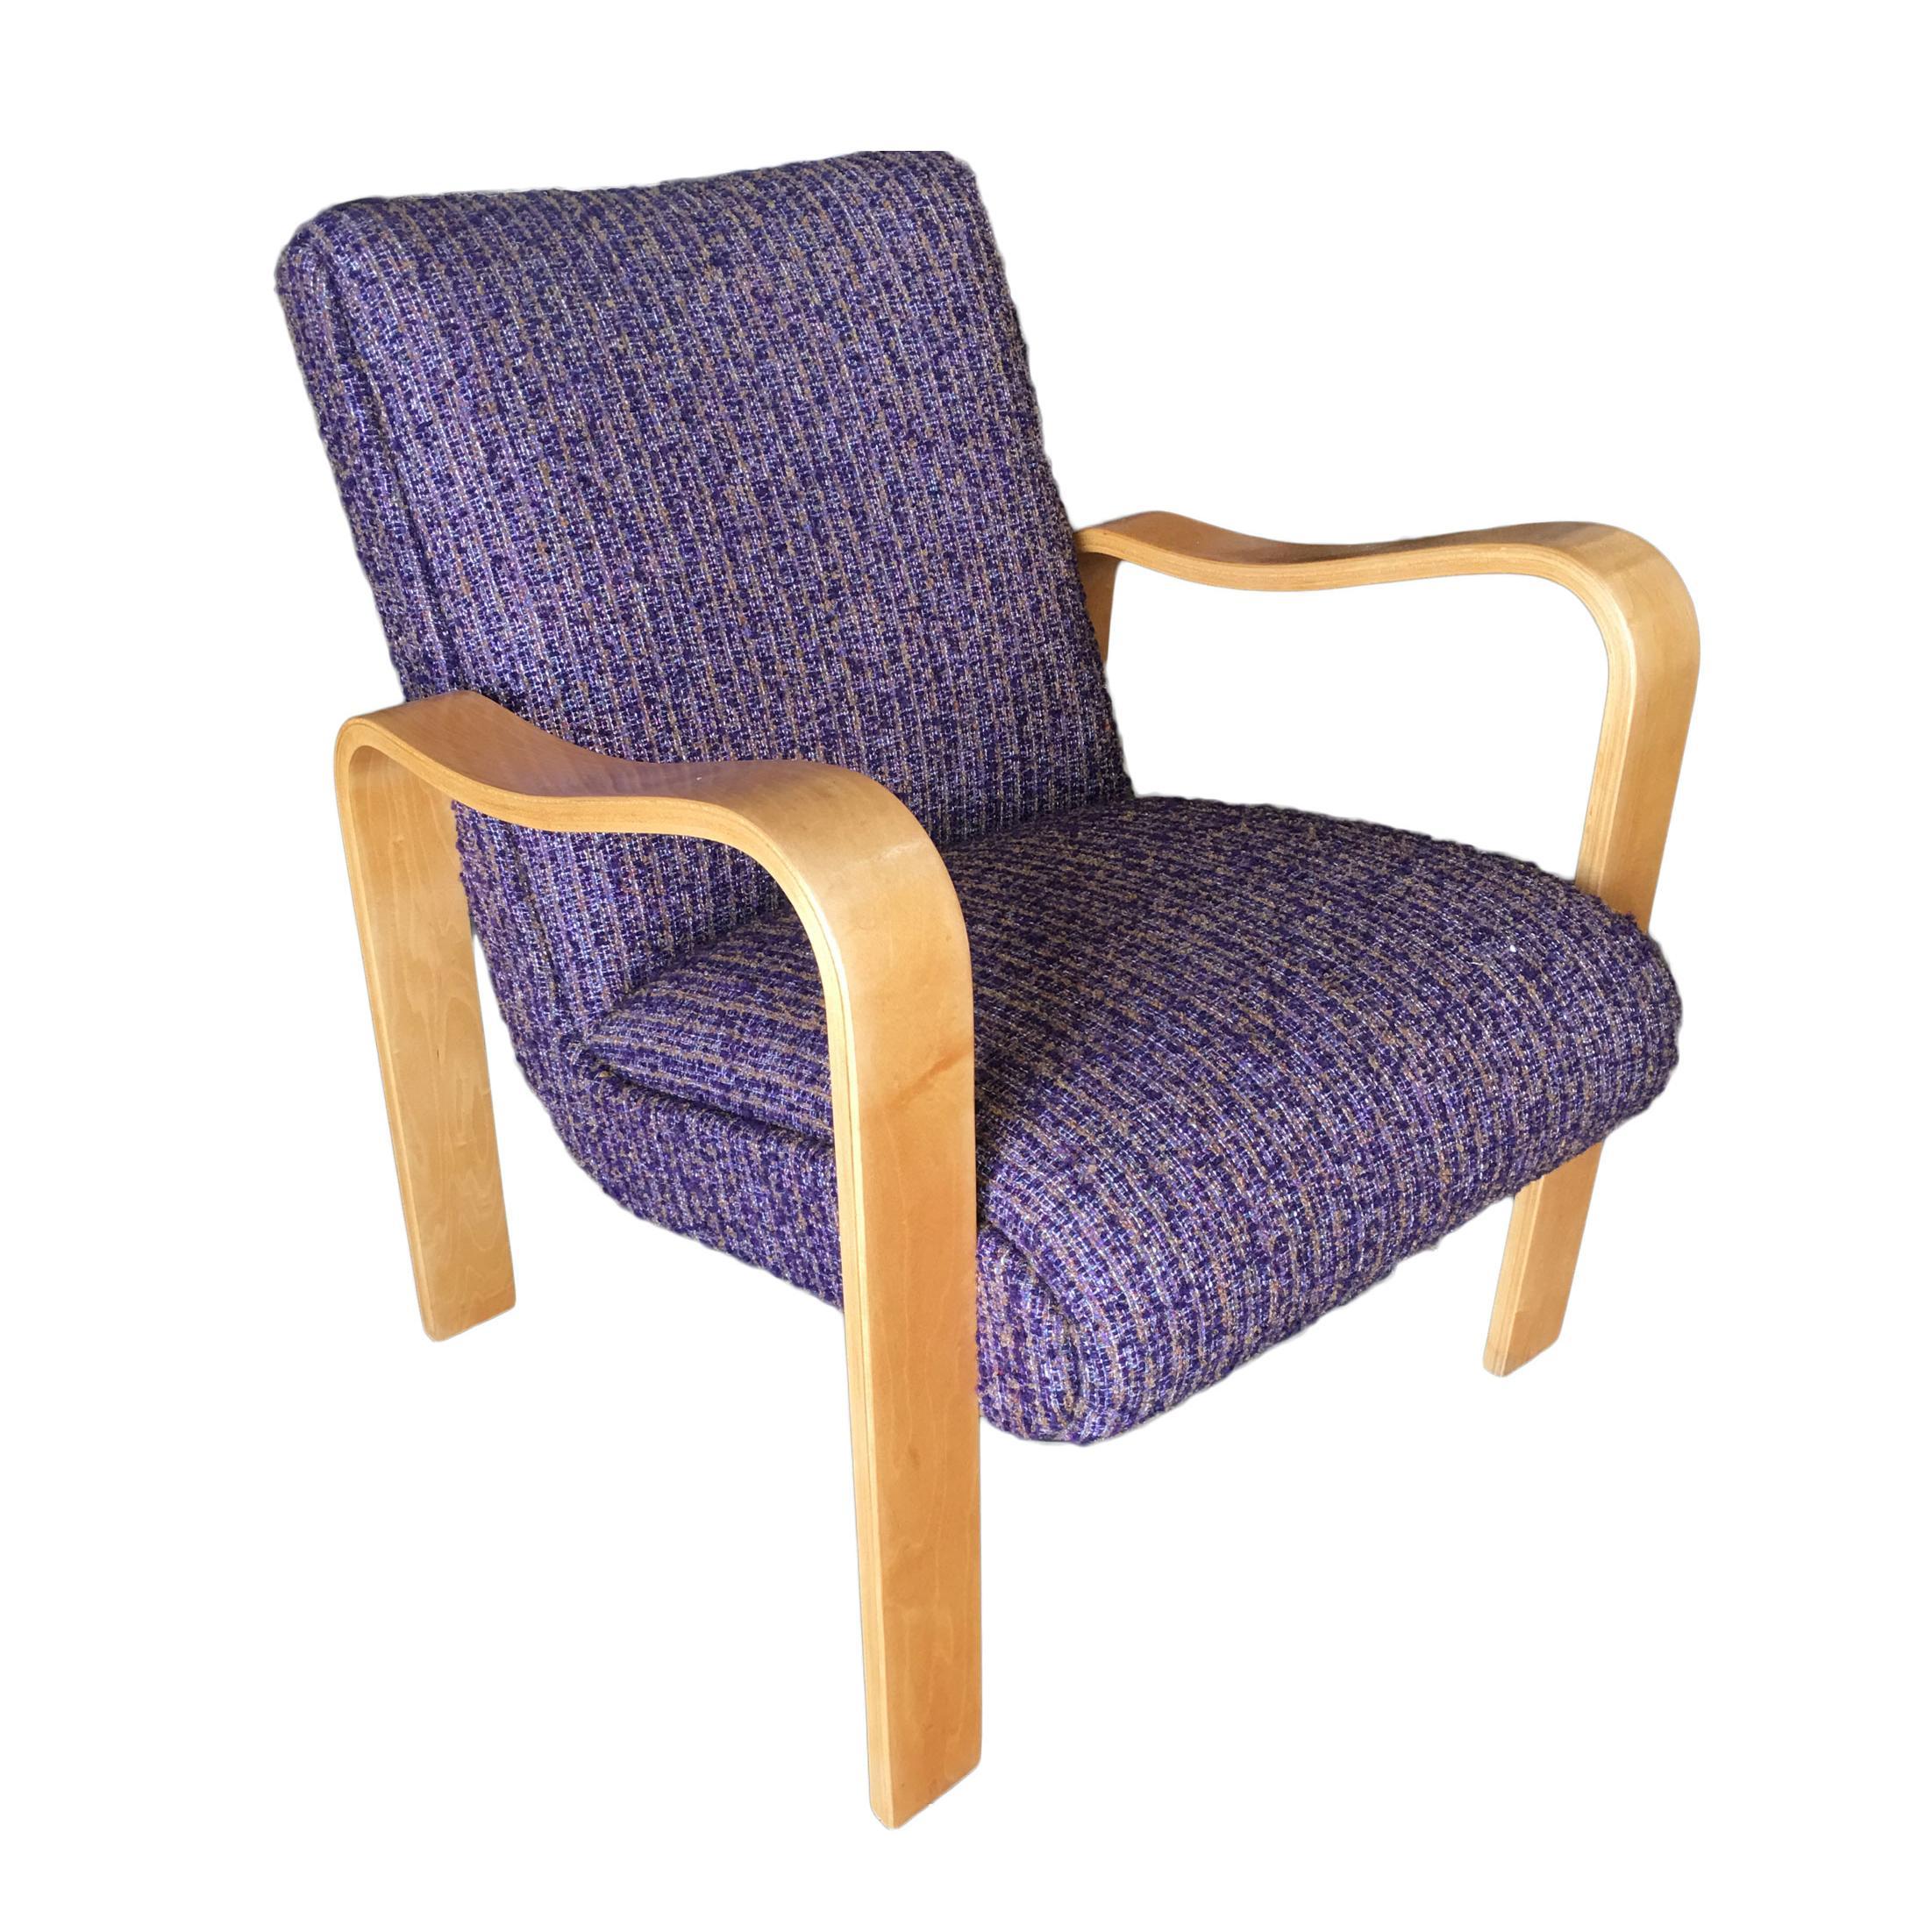 Thonet-Sessel aus Bugholz mit lila Sitz